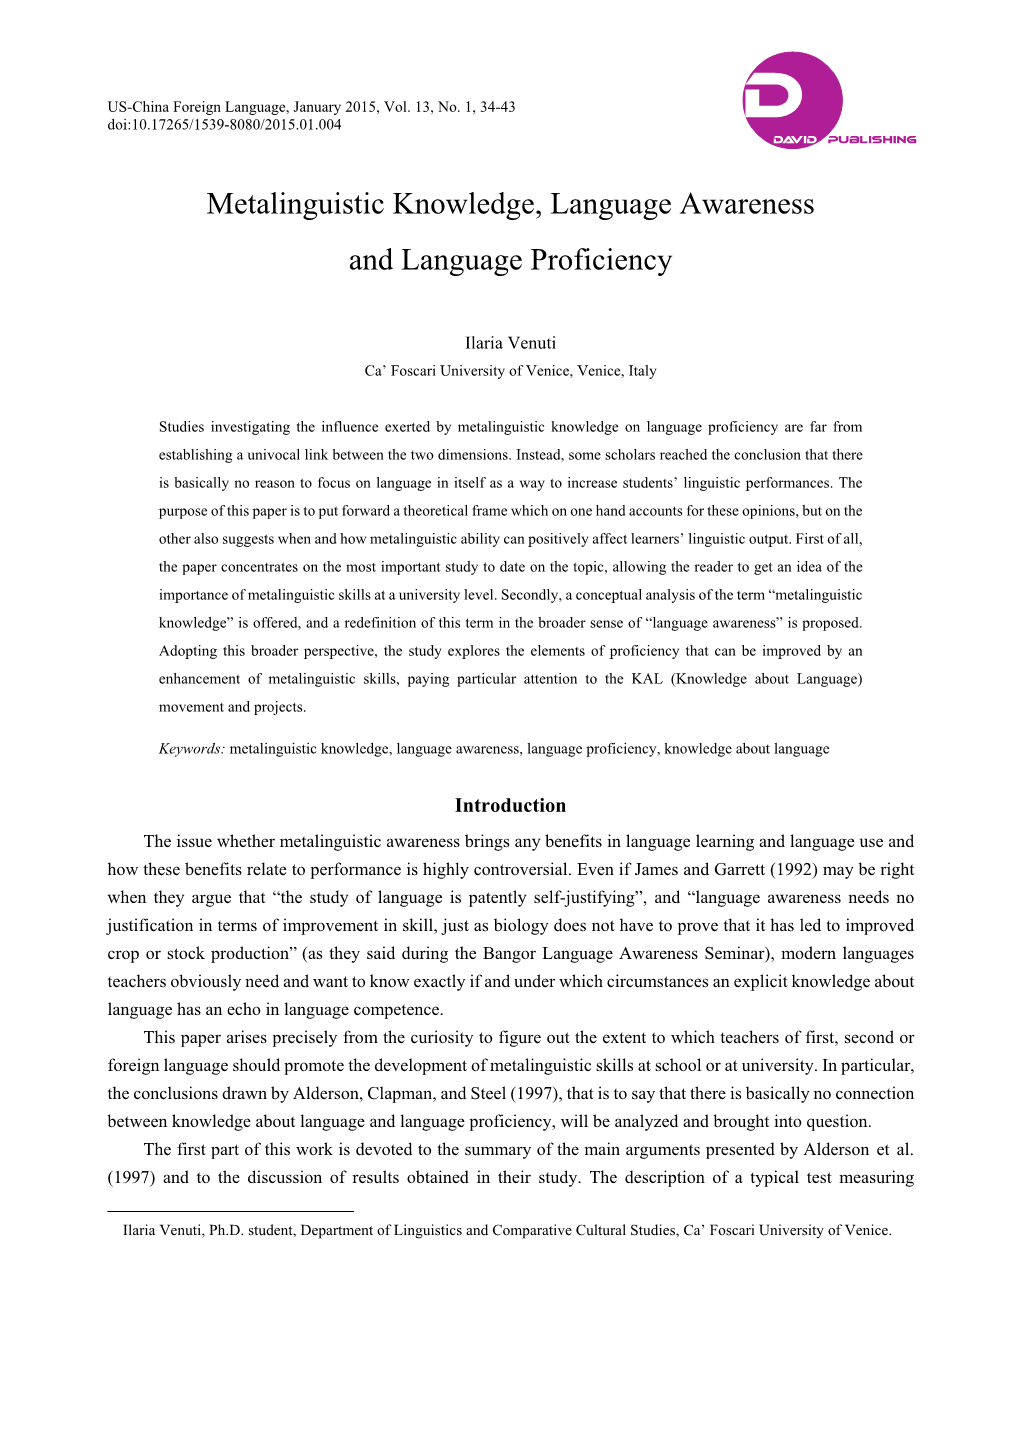 Metalinguistic Knowledge, Language Awareness and Language Proficiency